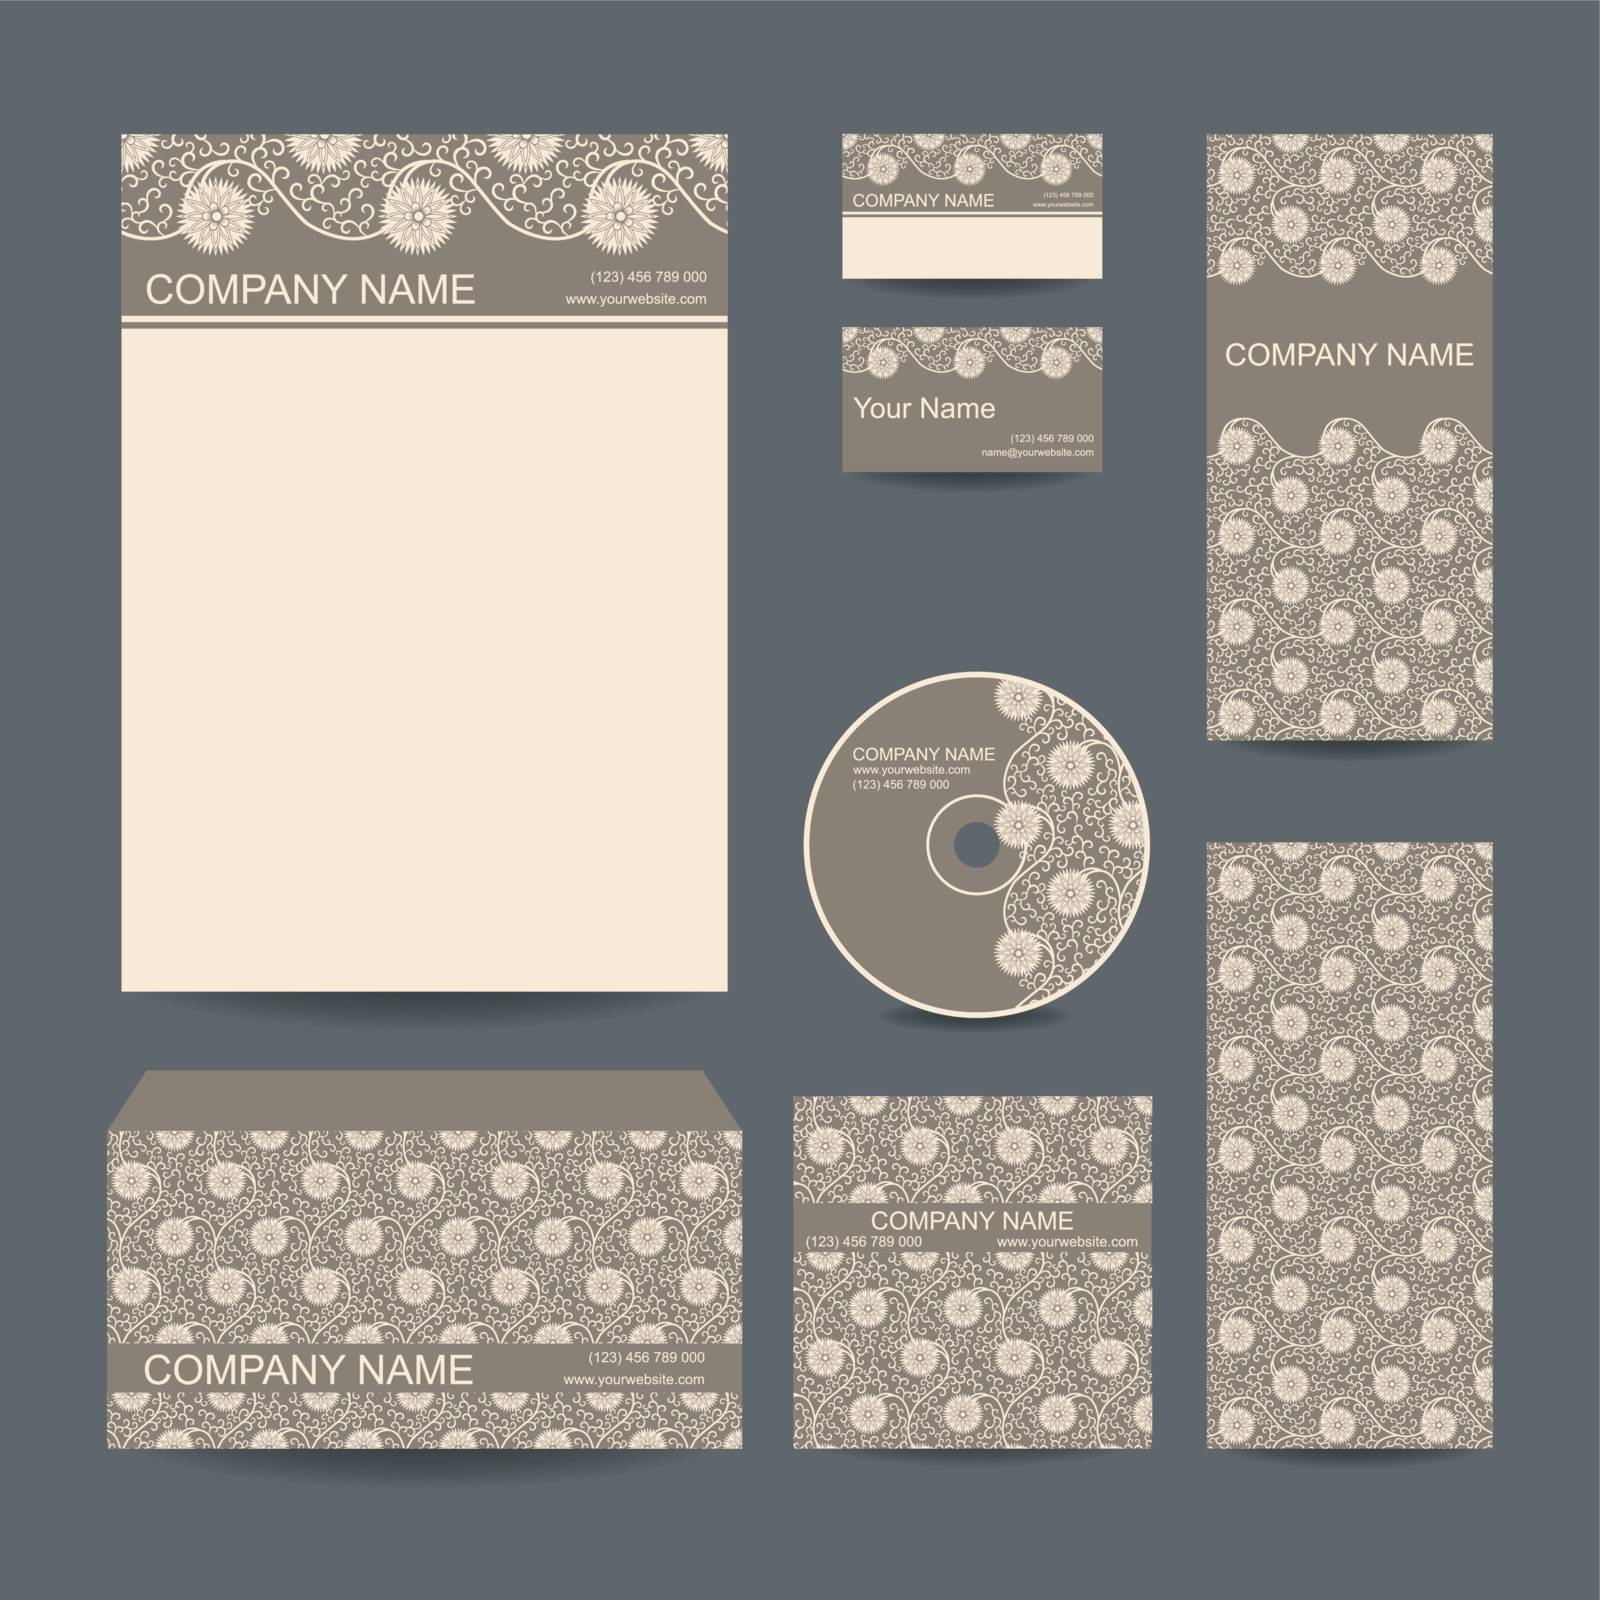 Stationery design set in vector format by KatiKapik